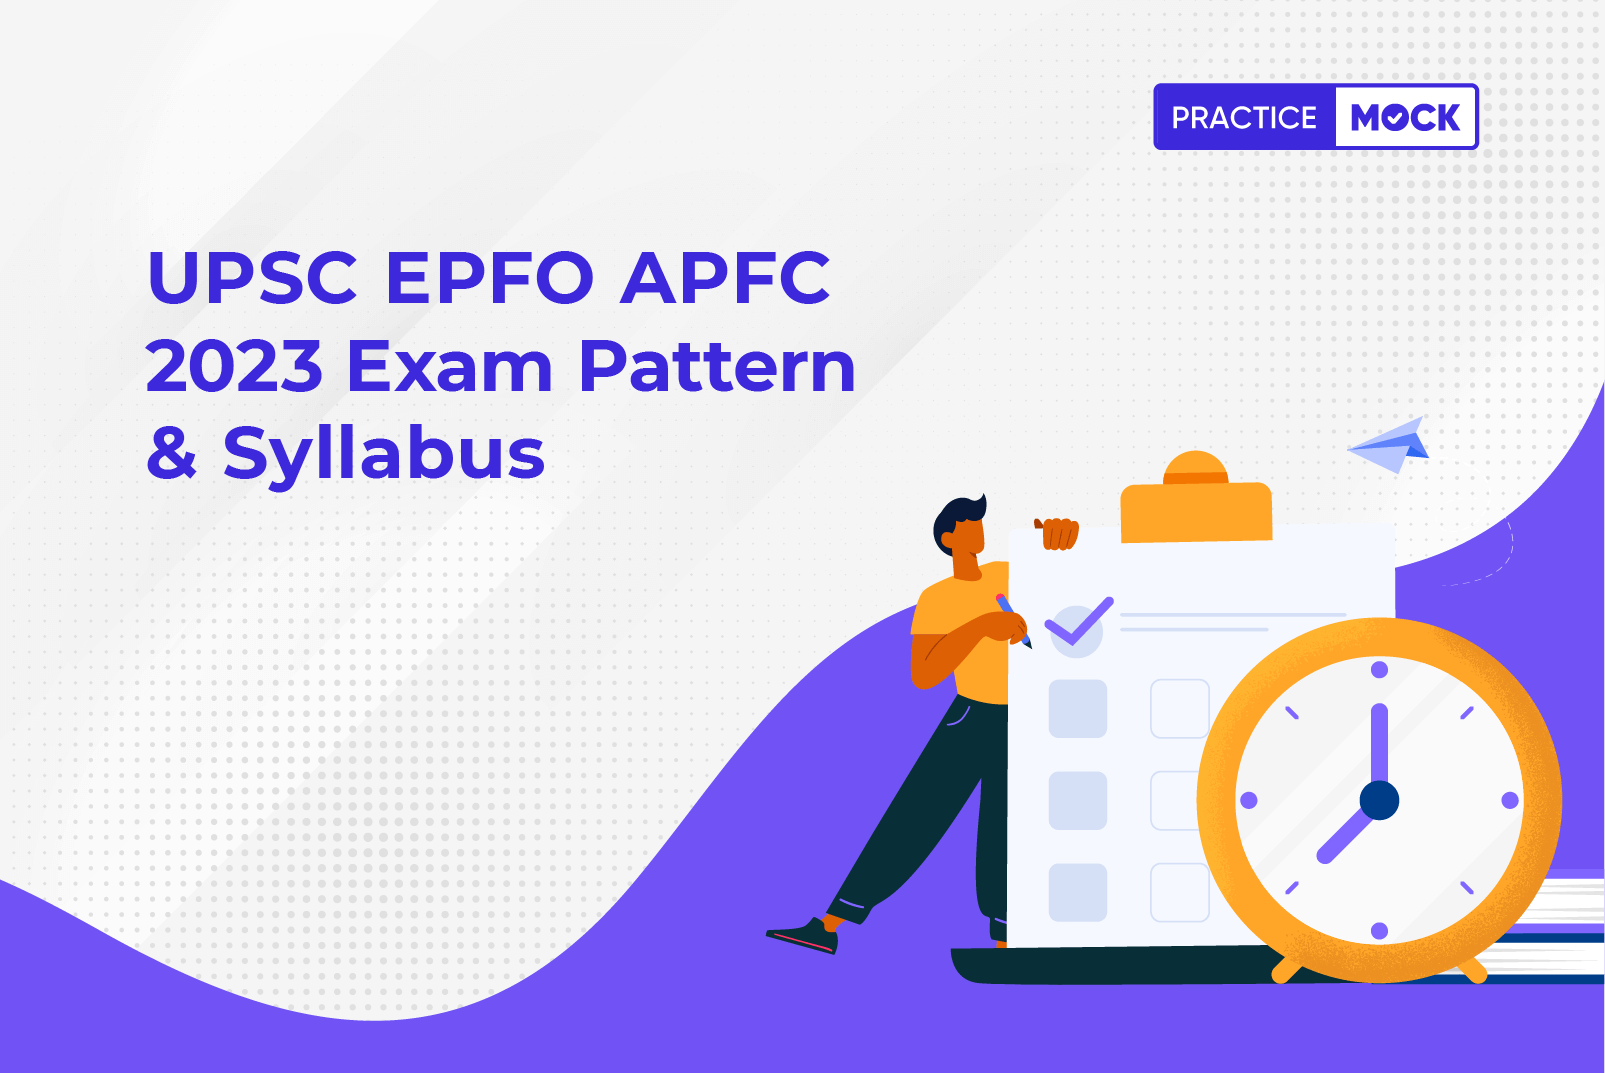 UPSC EPFO APFC 2023 Exam Pattern & Syllabus